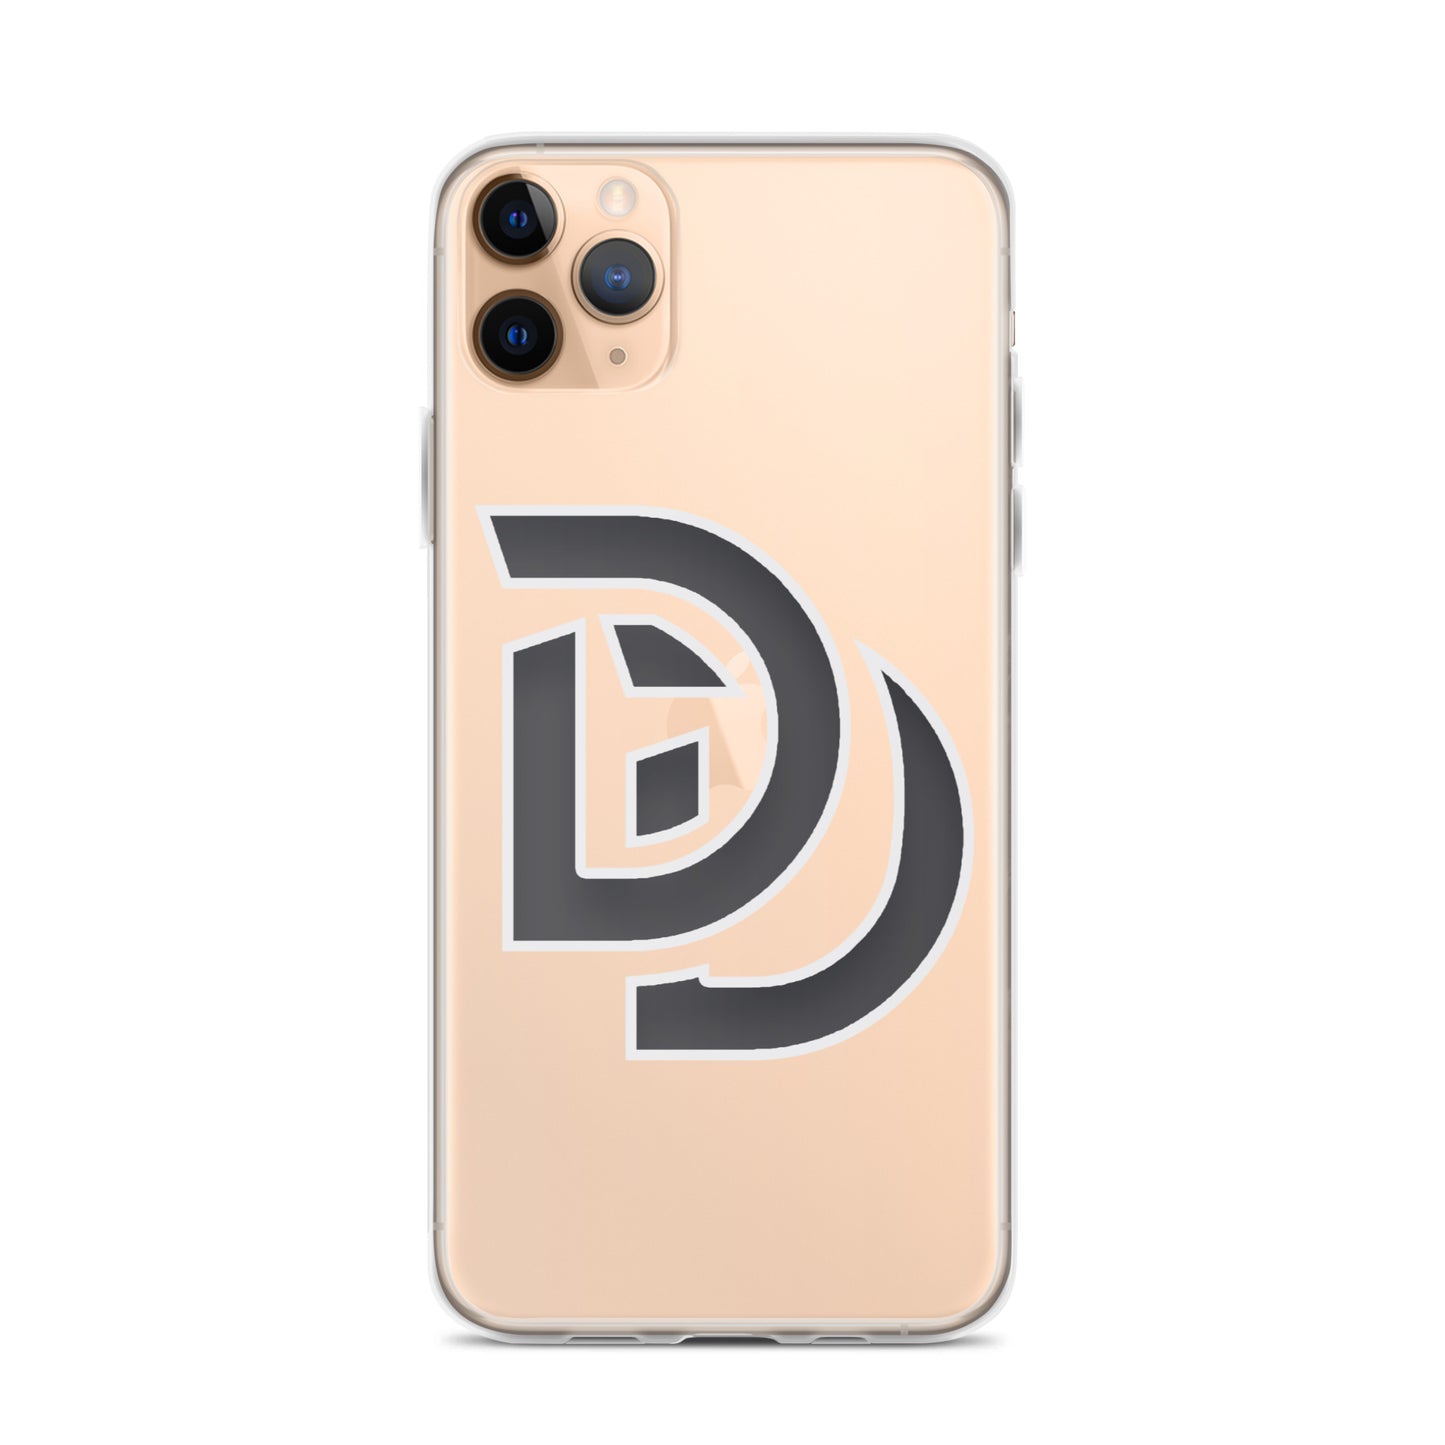 DD iPhone Case